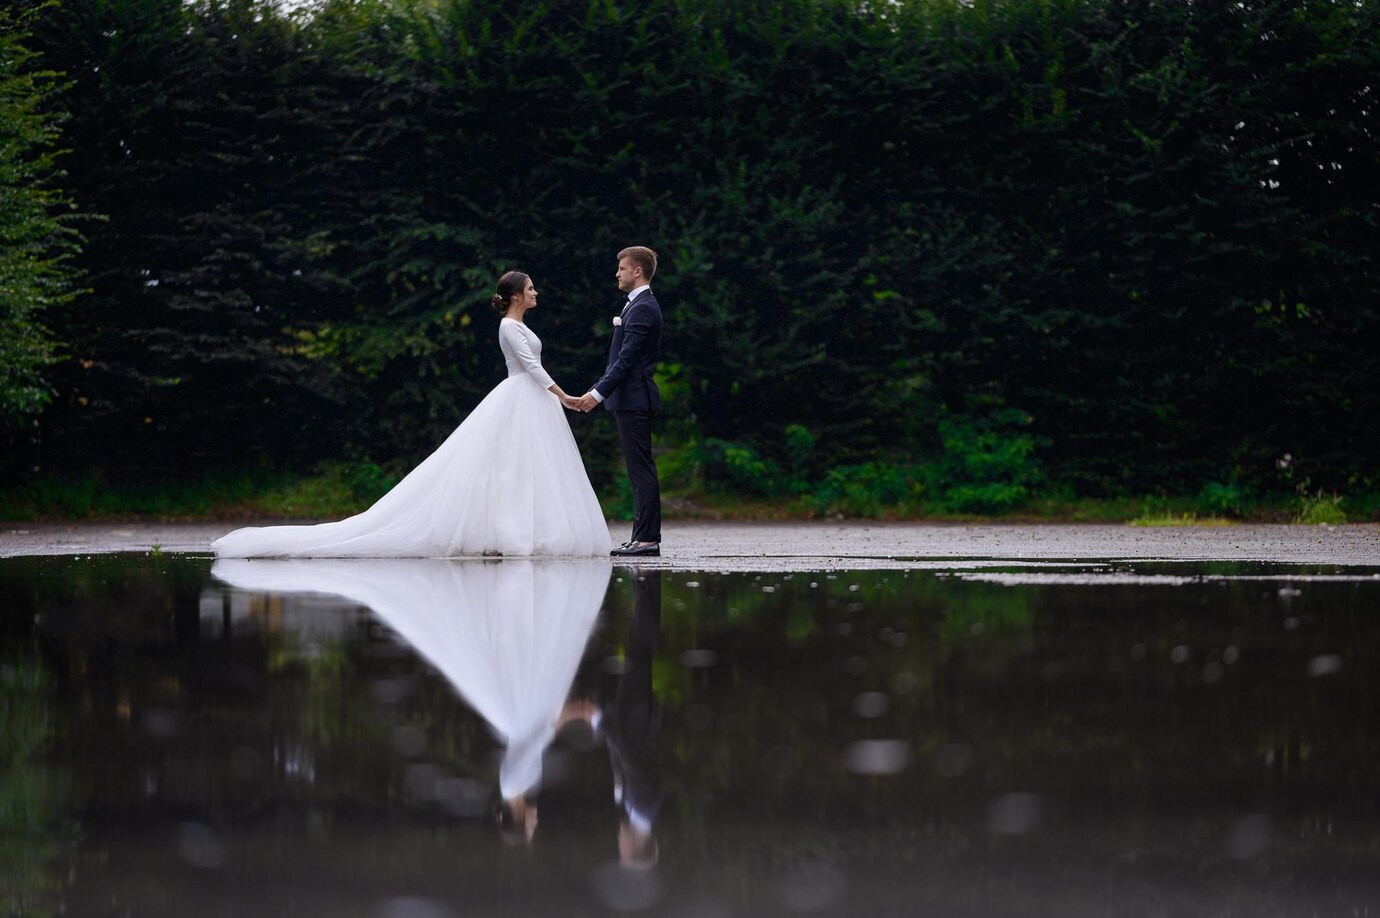 Rain-themed weddings: Making the most of the rainy season